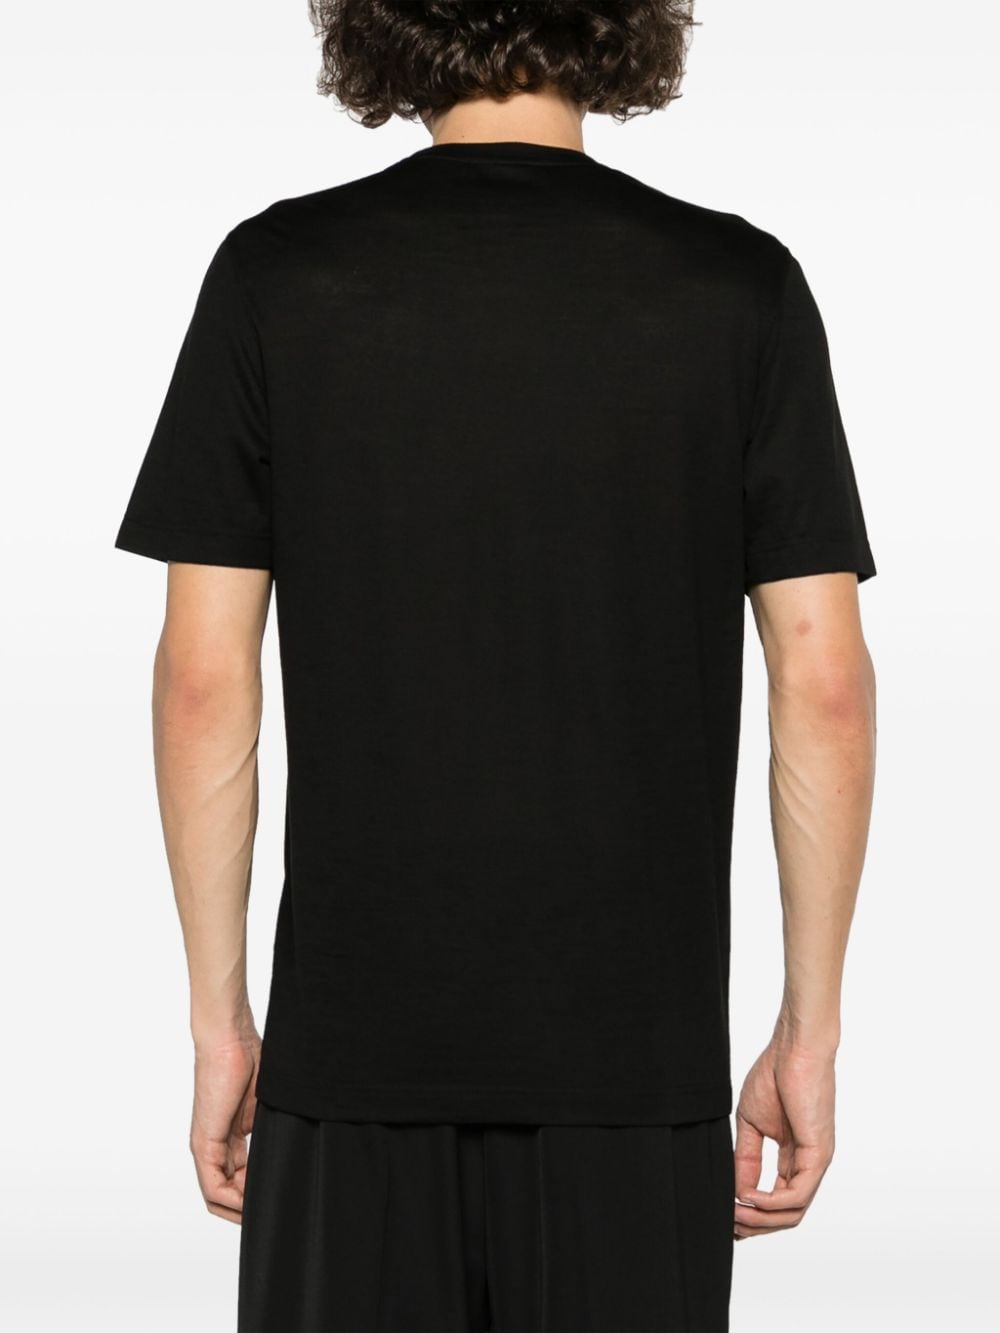 D4.0 T-shirt van scheerwol Zwart